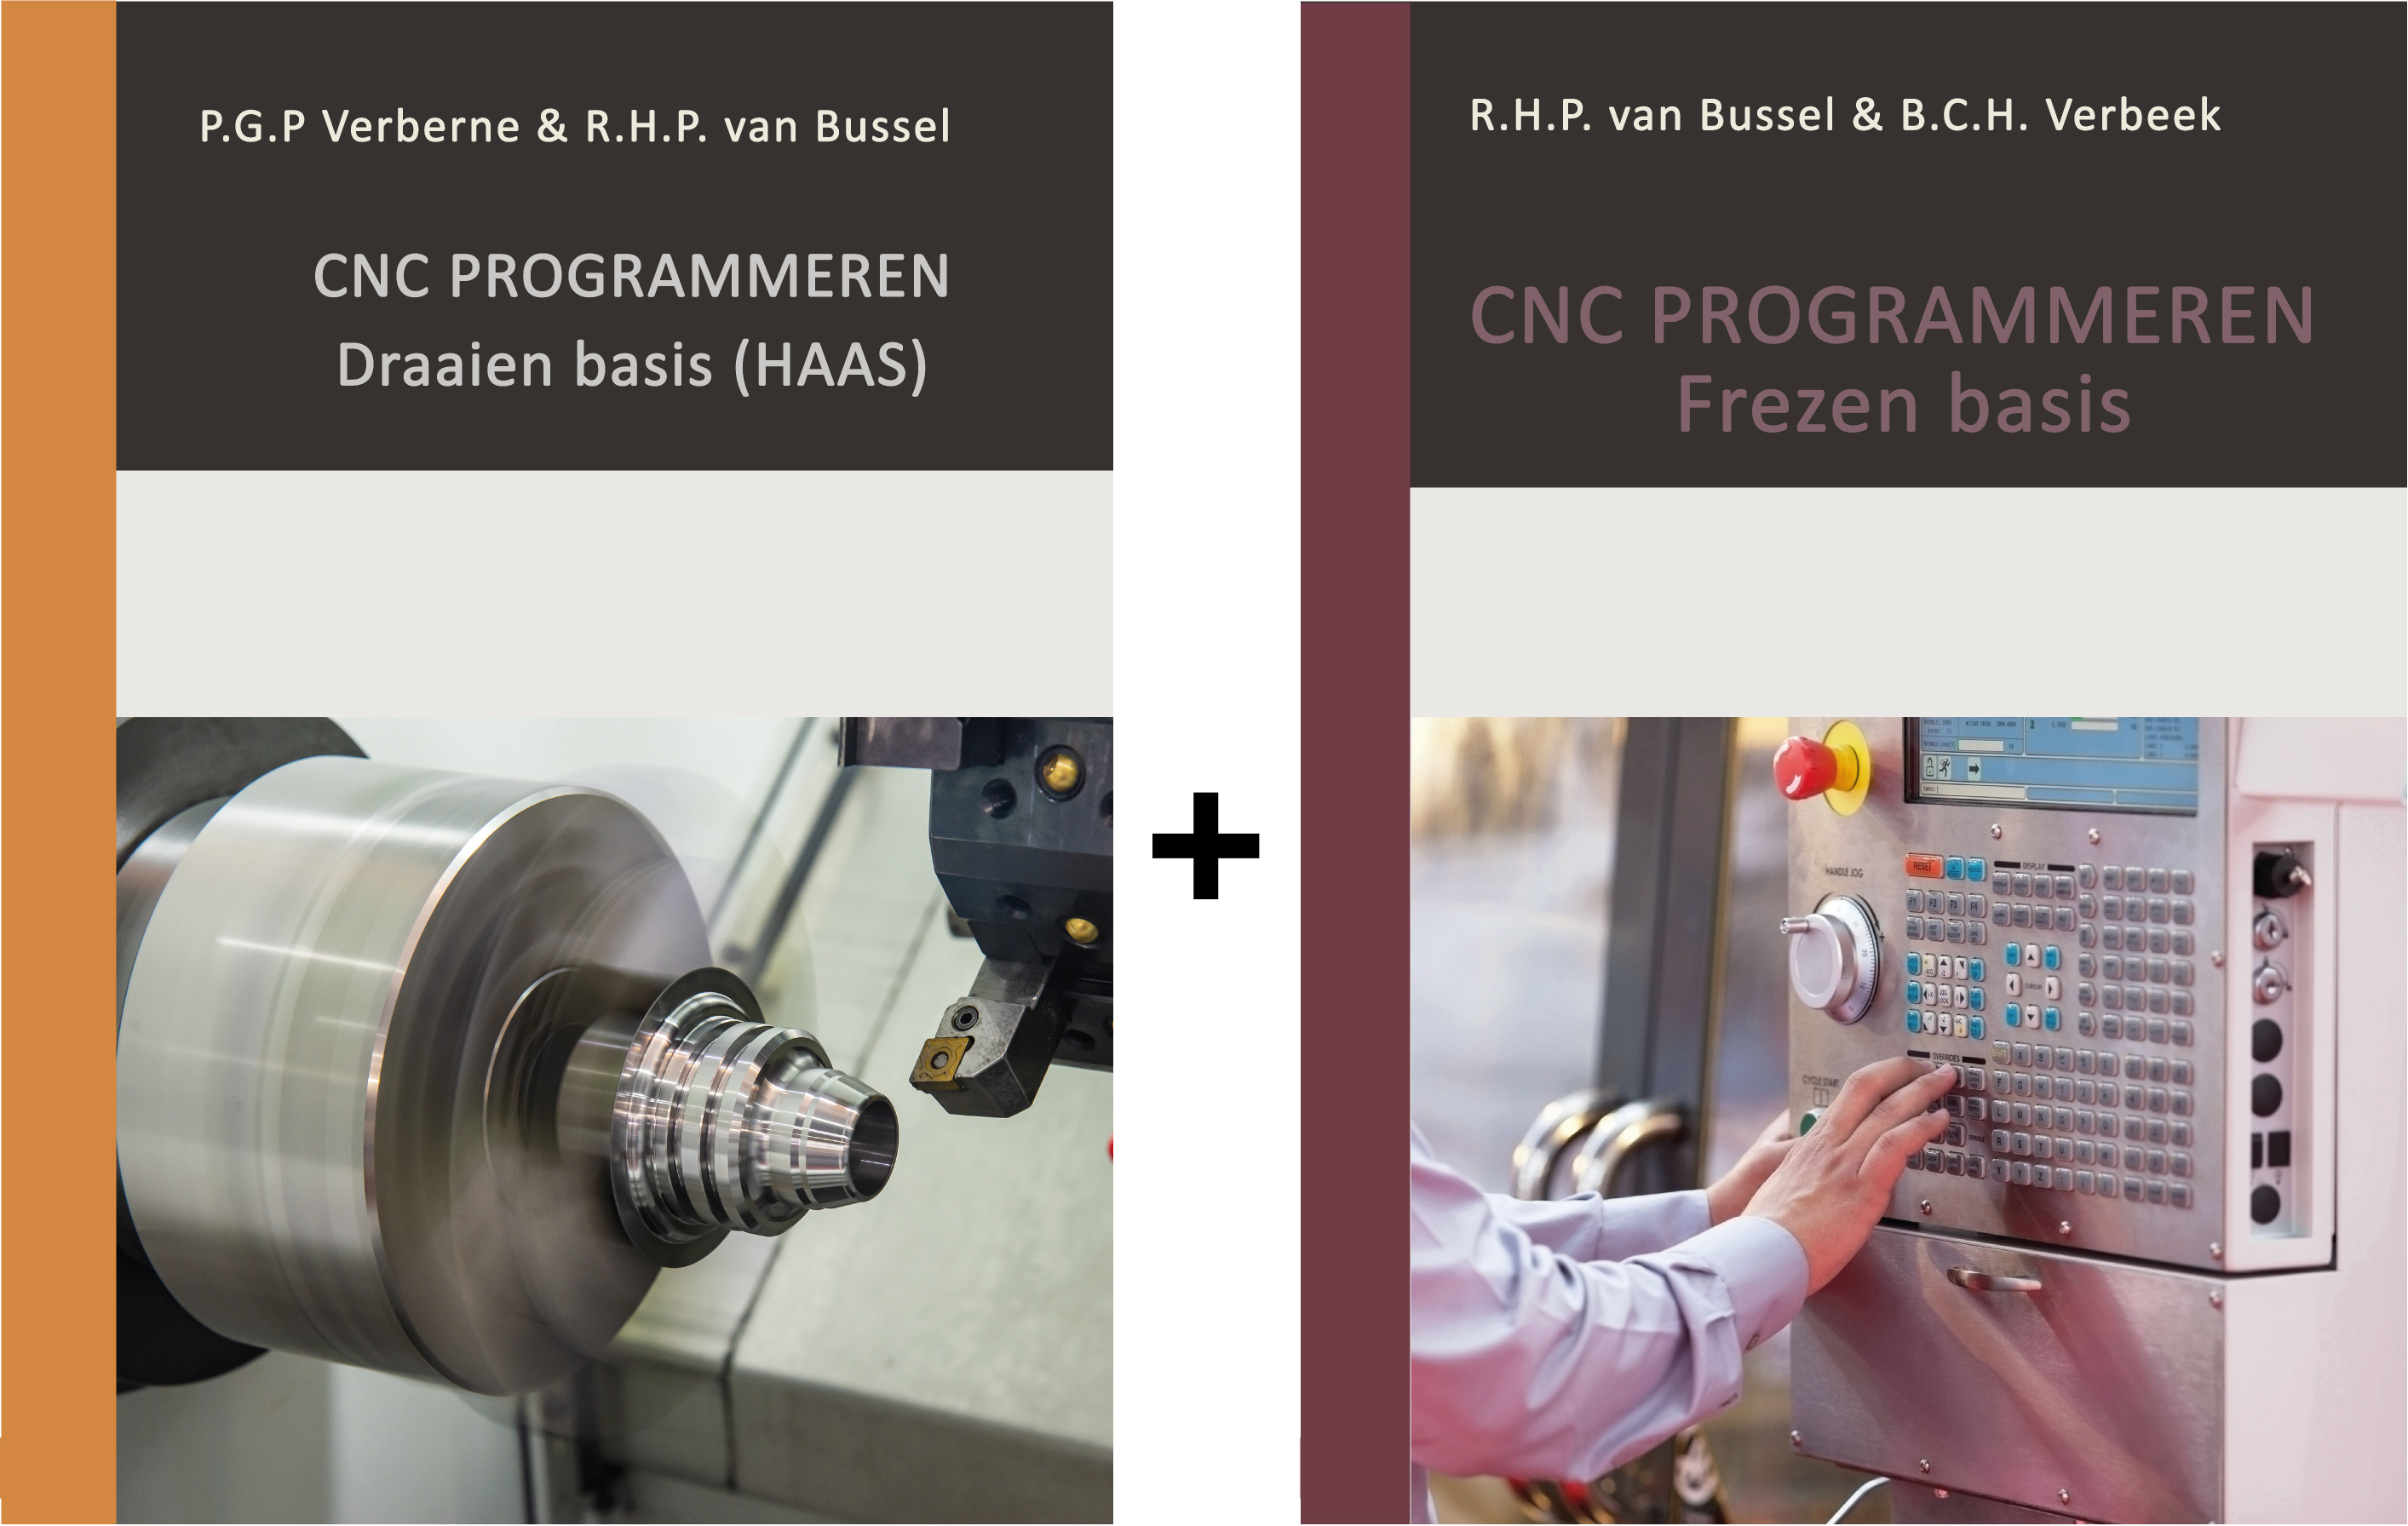 CNC programmeren compleet's thumbnail image